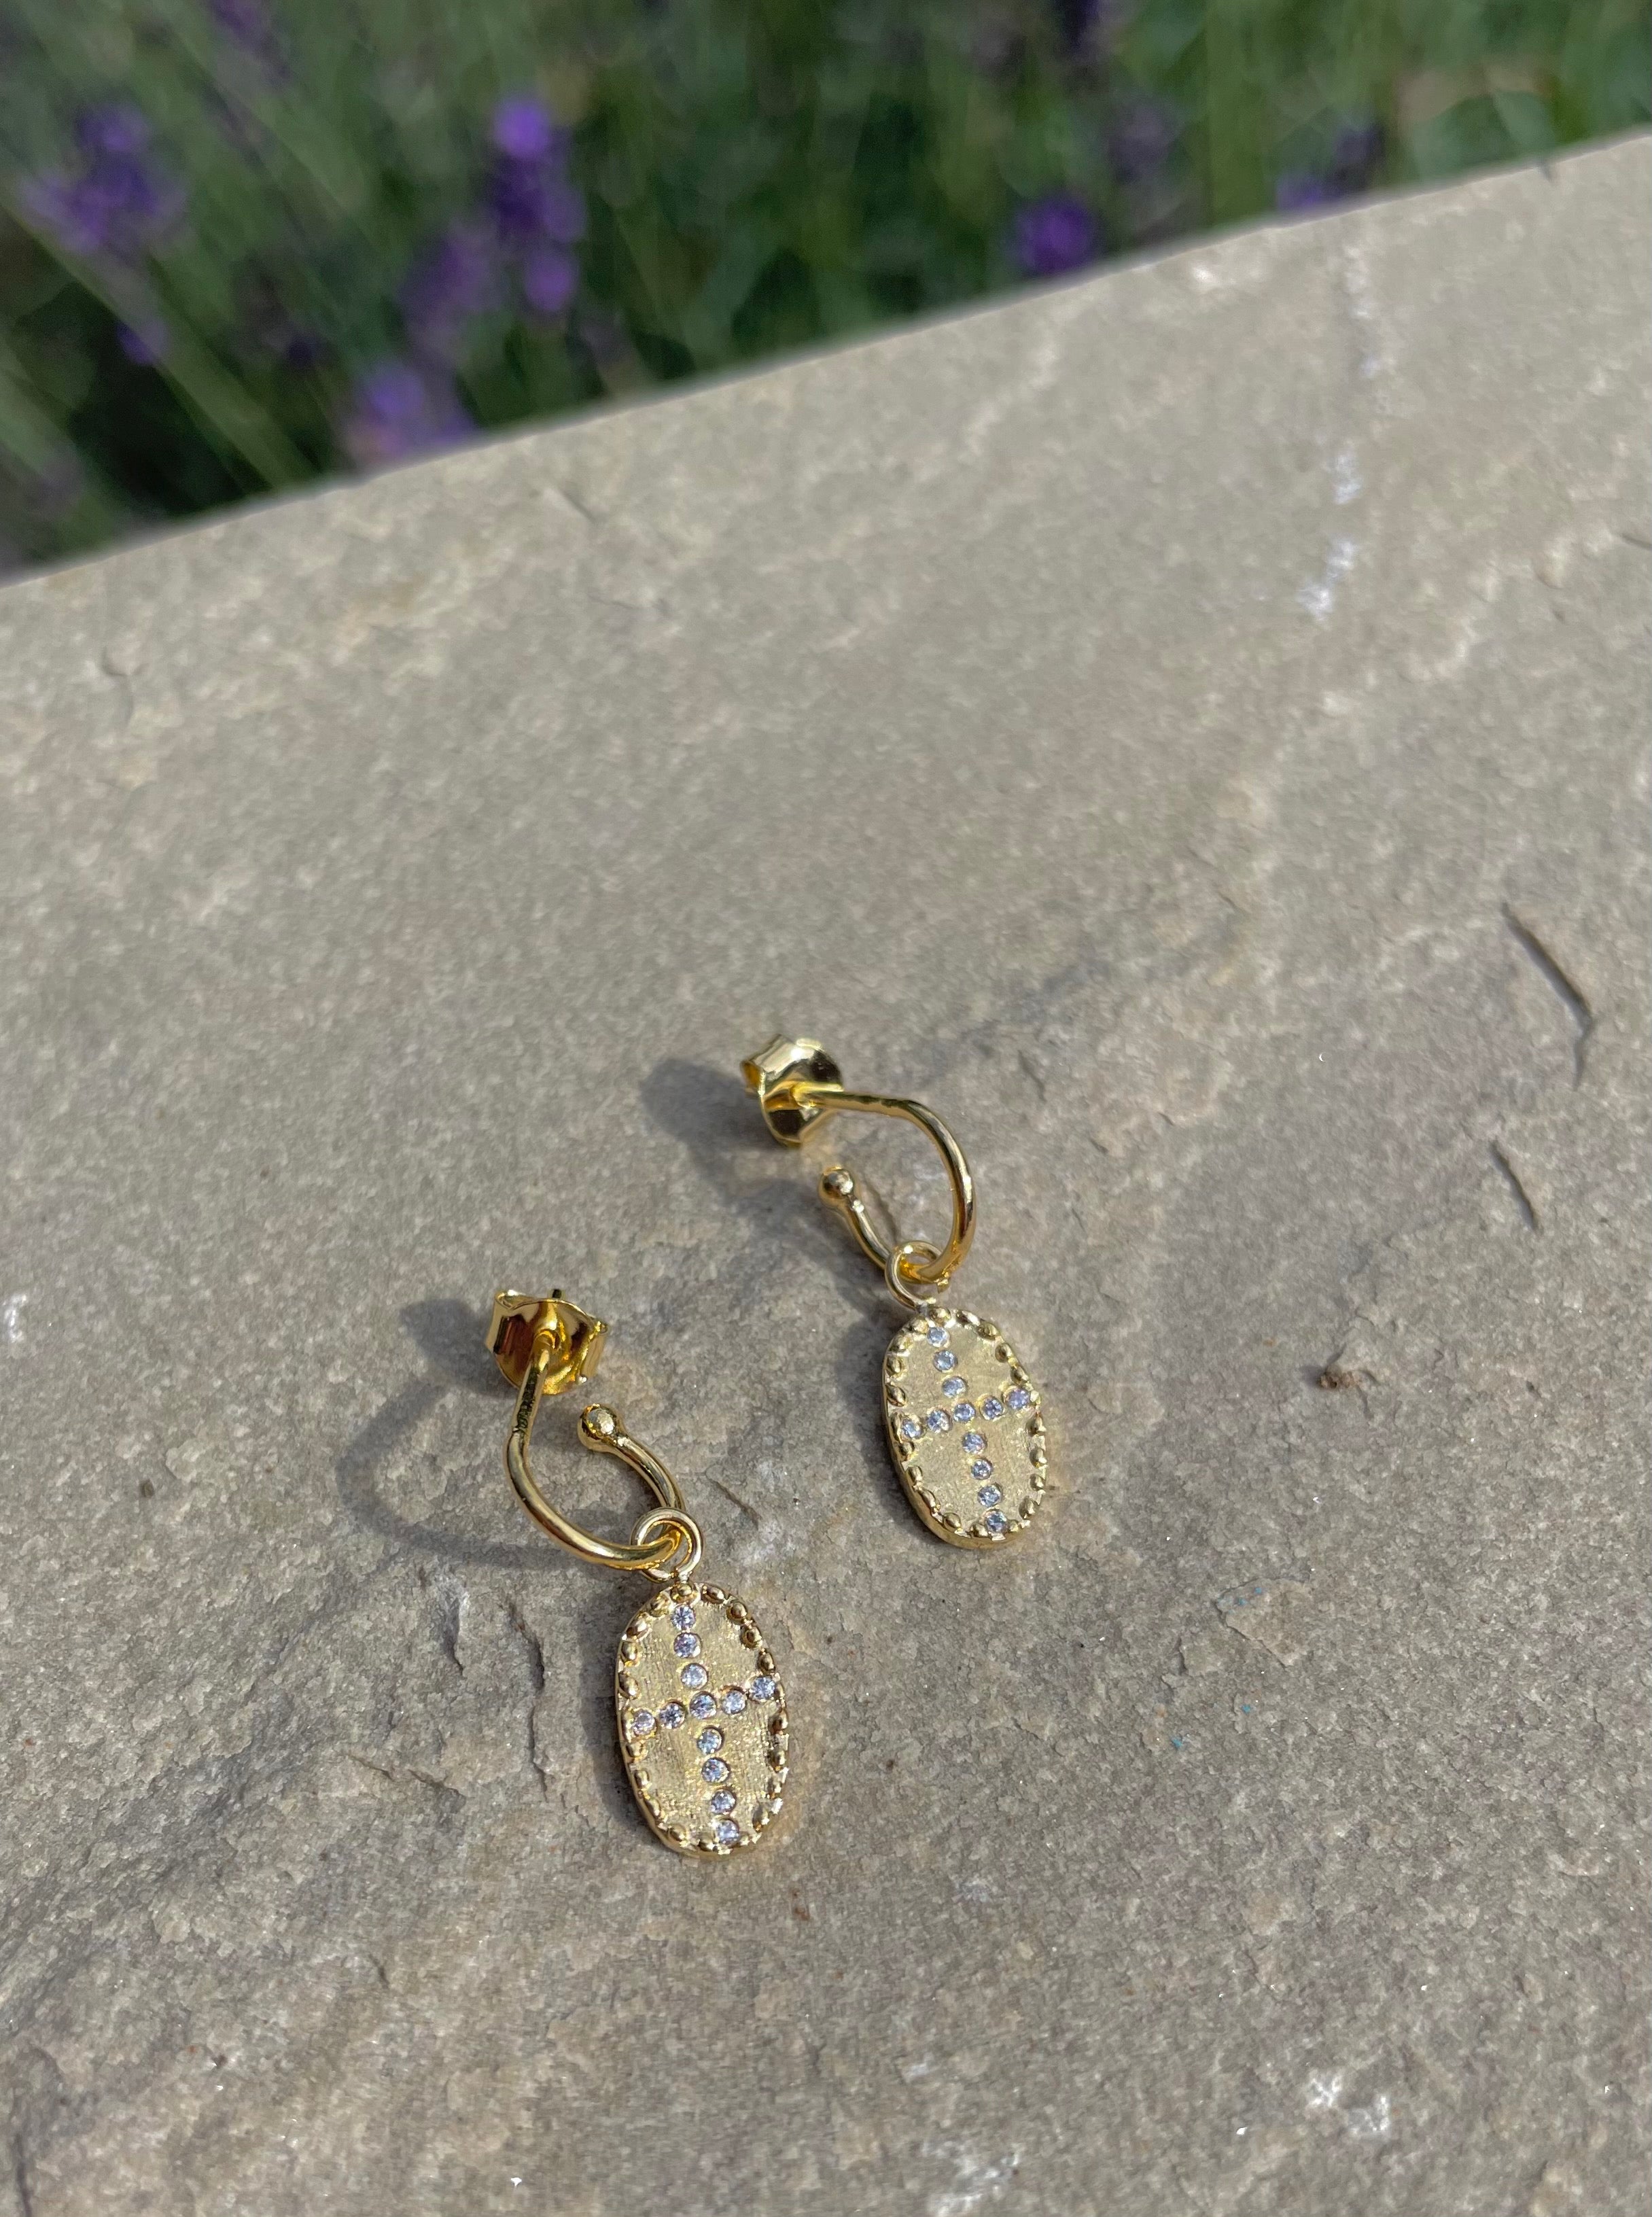 huggie earrings with white stones by louise hendricks